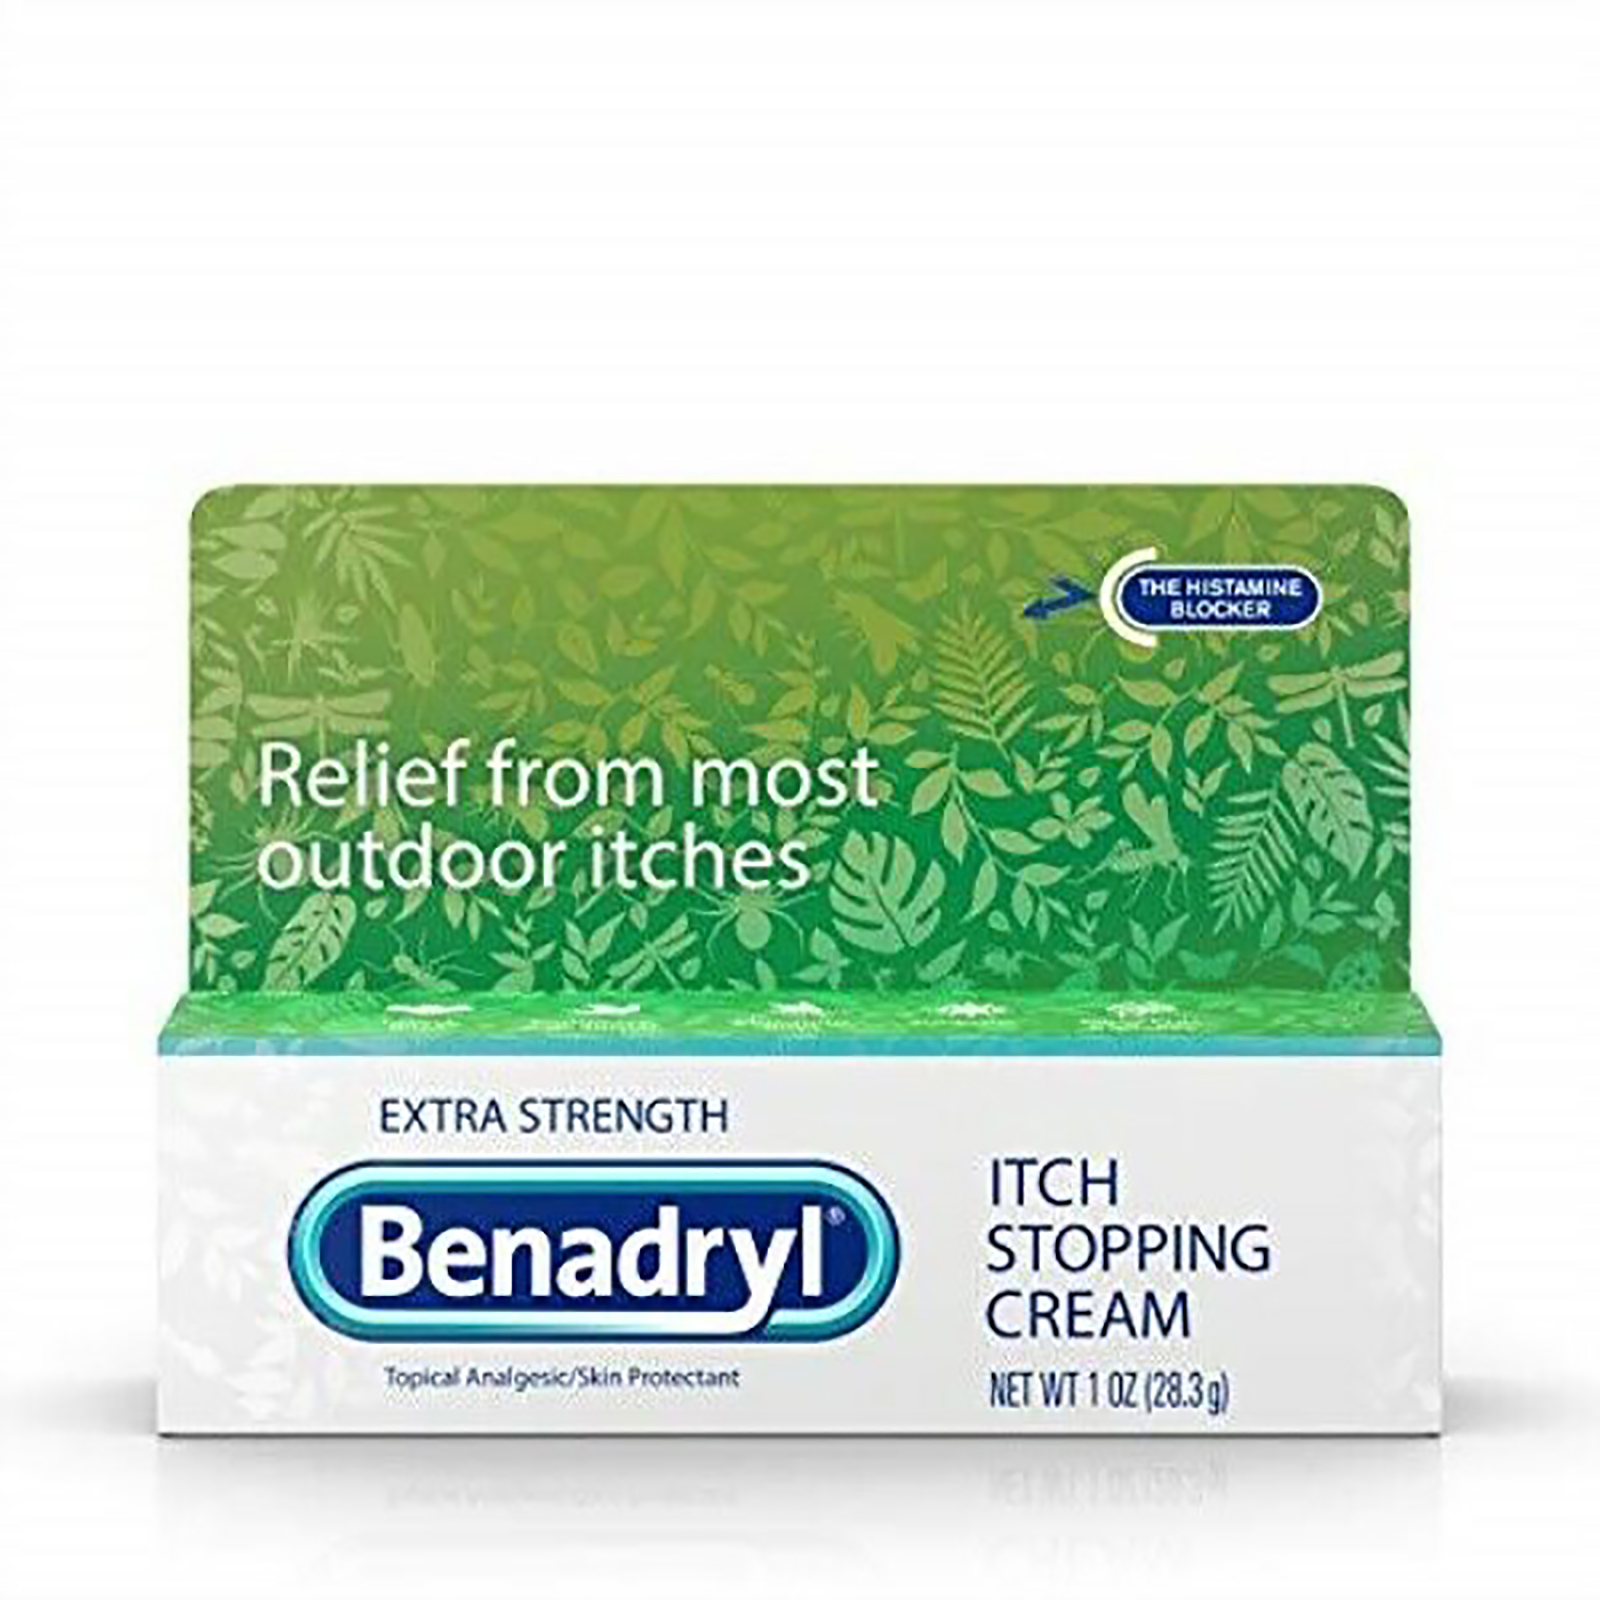 Benadryl 1oz. Extra Strength Itch Stopping Cream